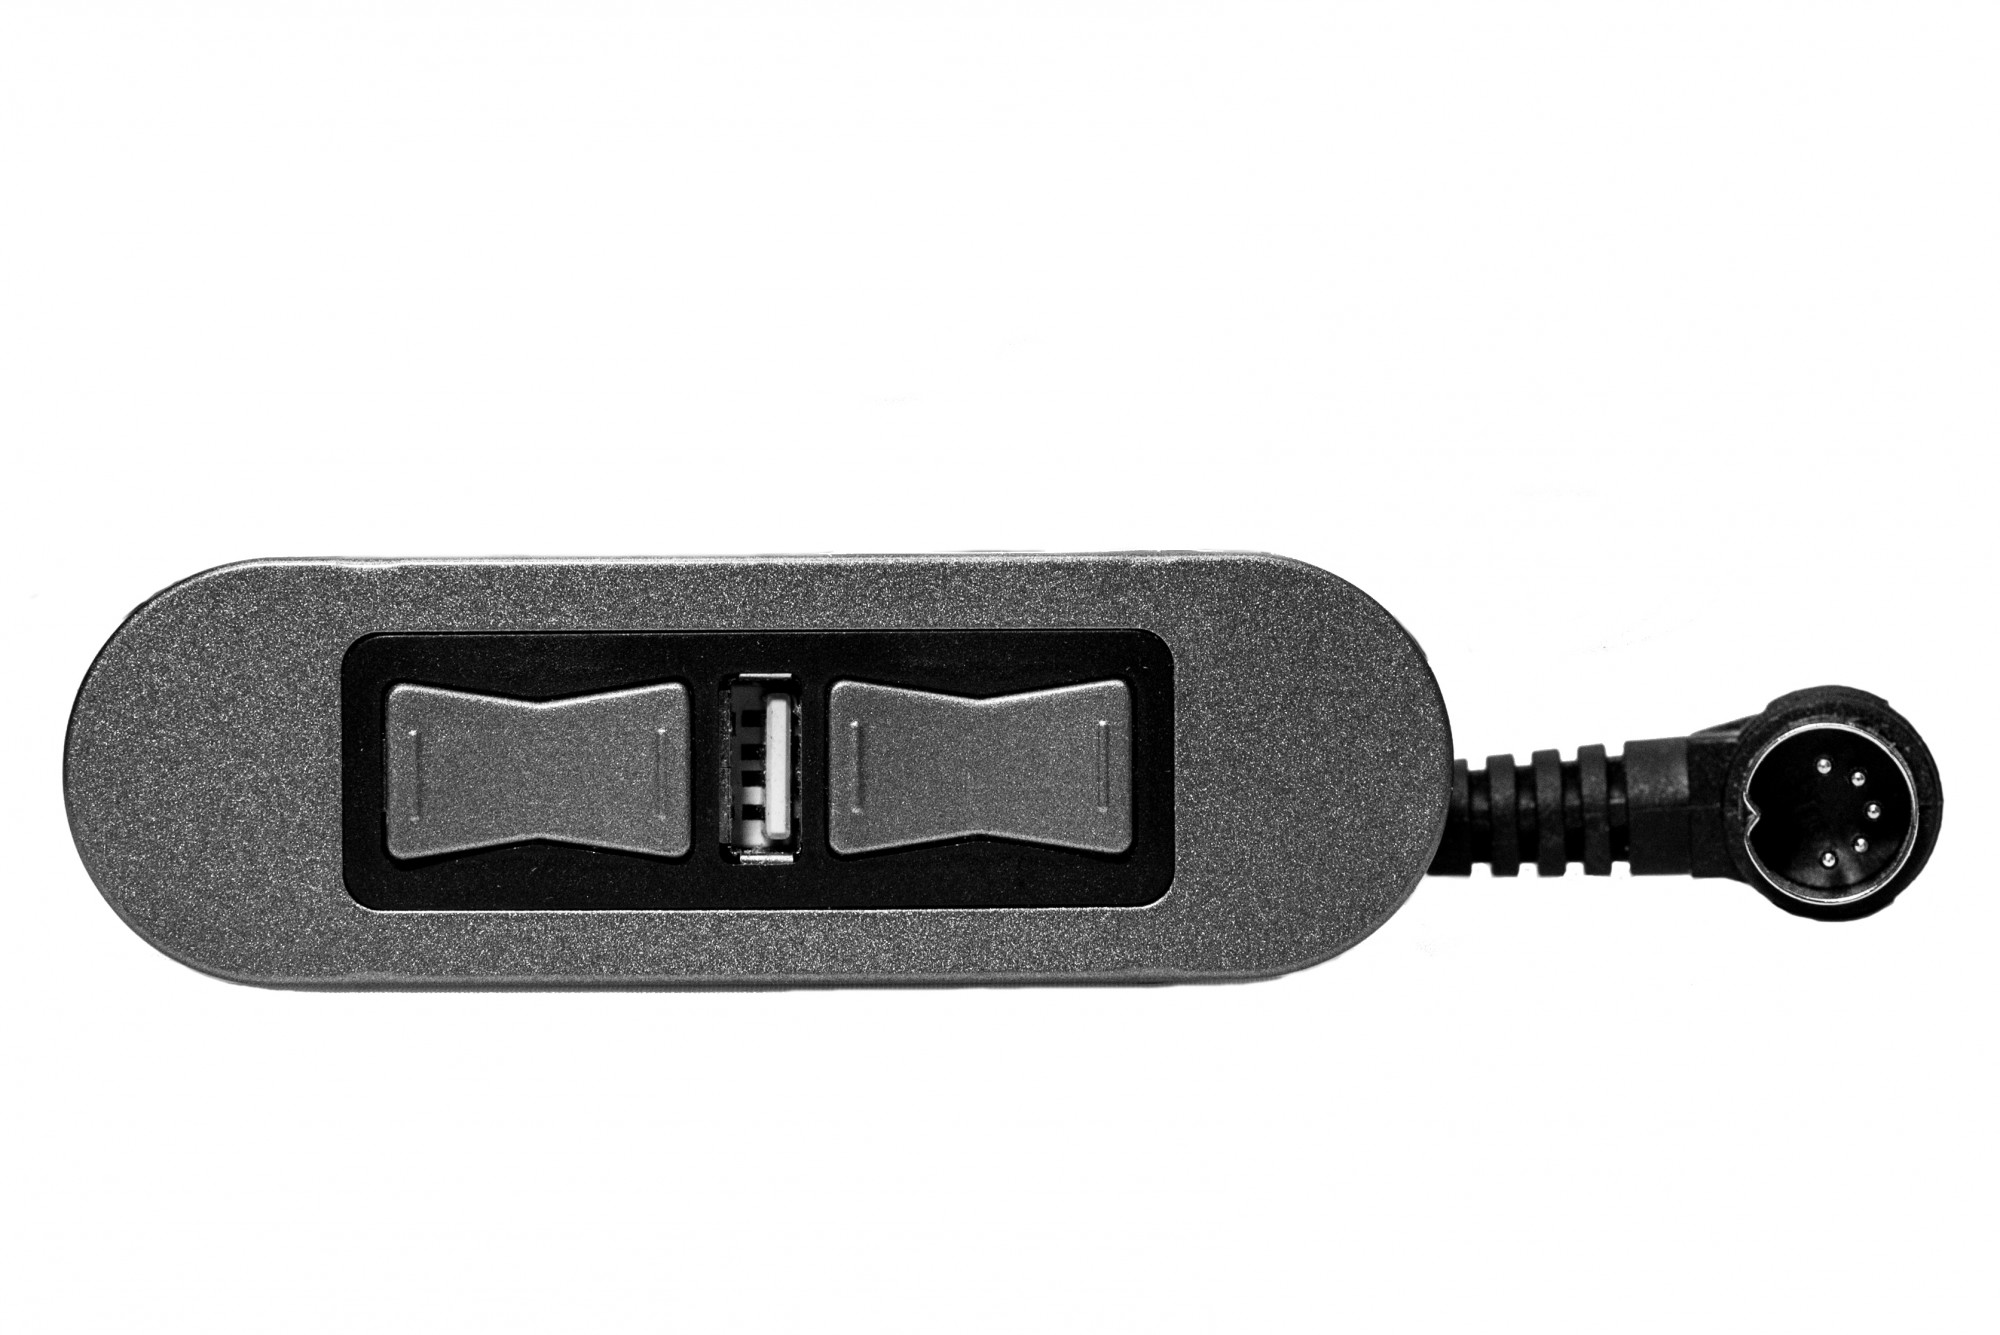 2 MOTOR ROCKER CONTROL WITH USB